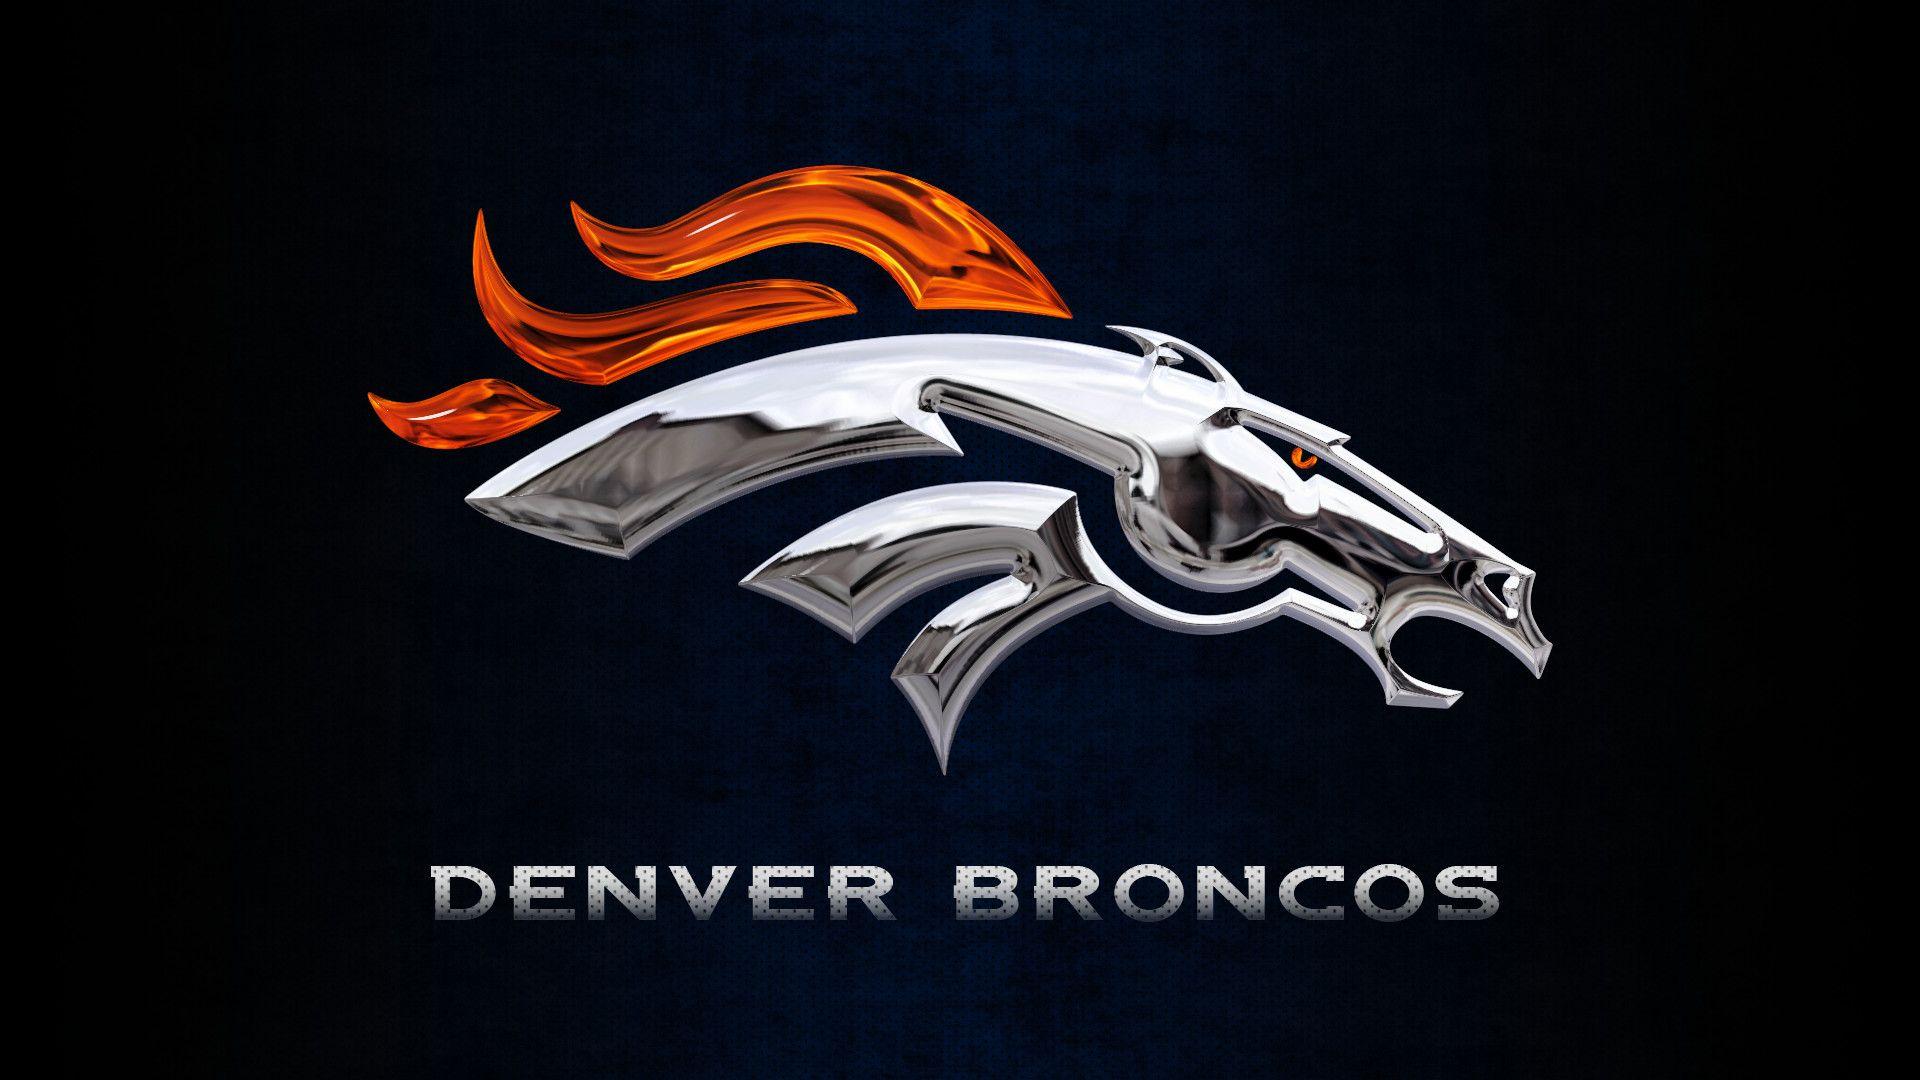 Denver Broncos Wallpapers - Top Free